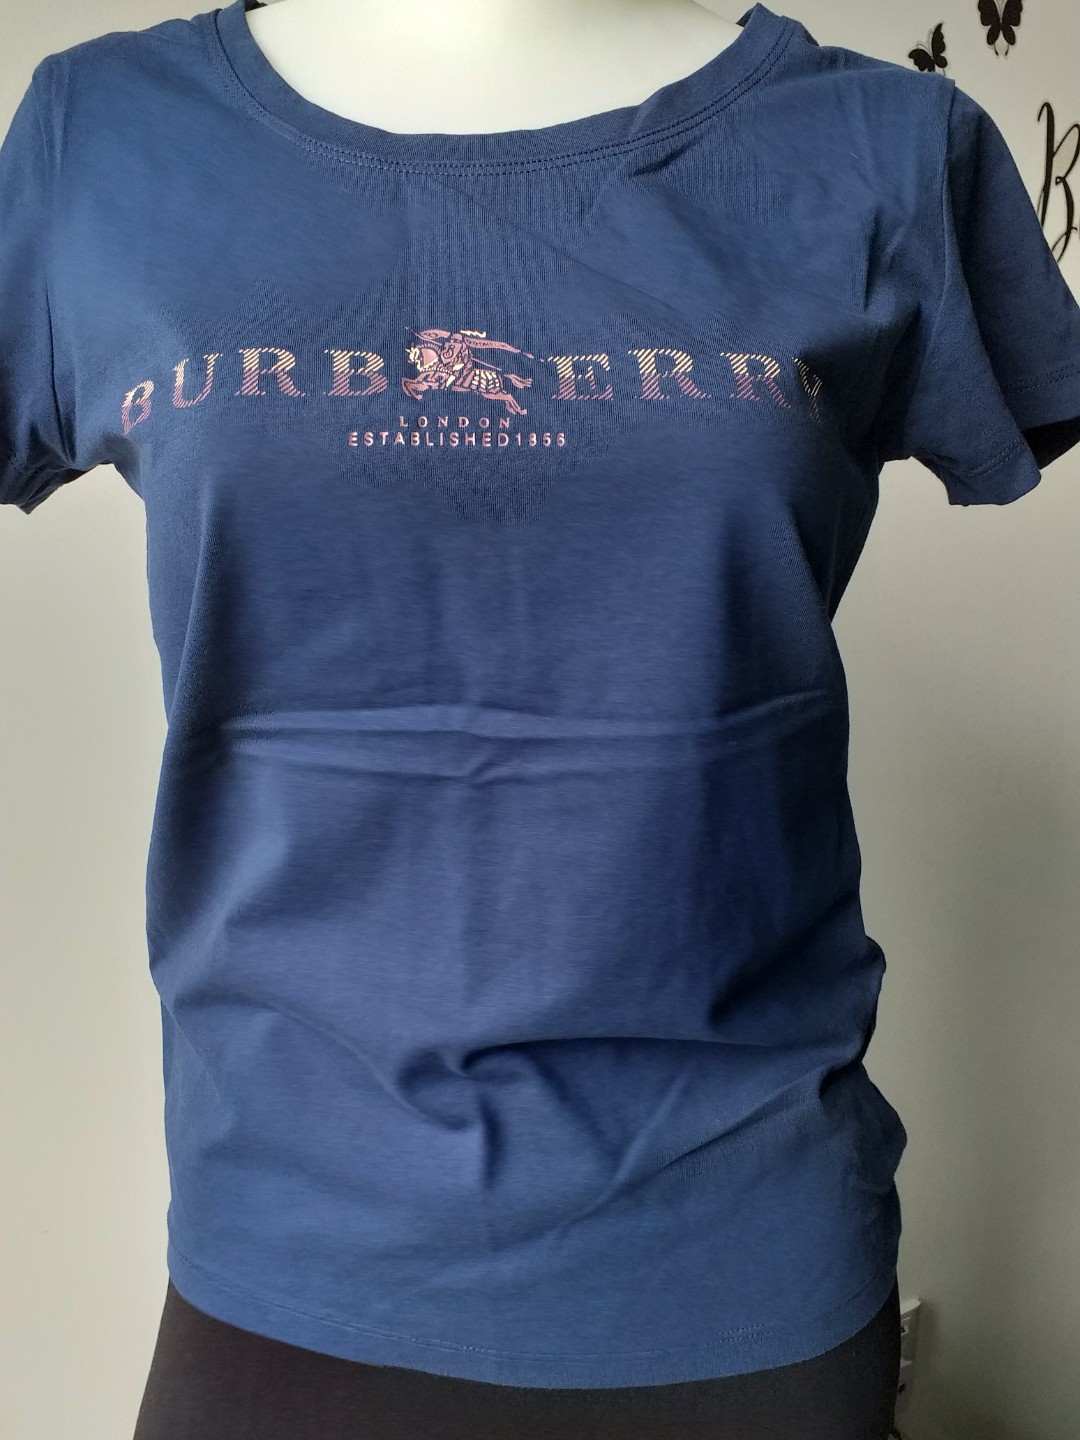 burberry tee shirt womens